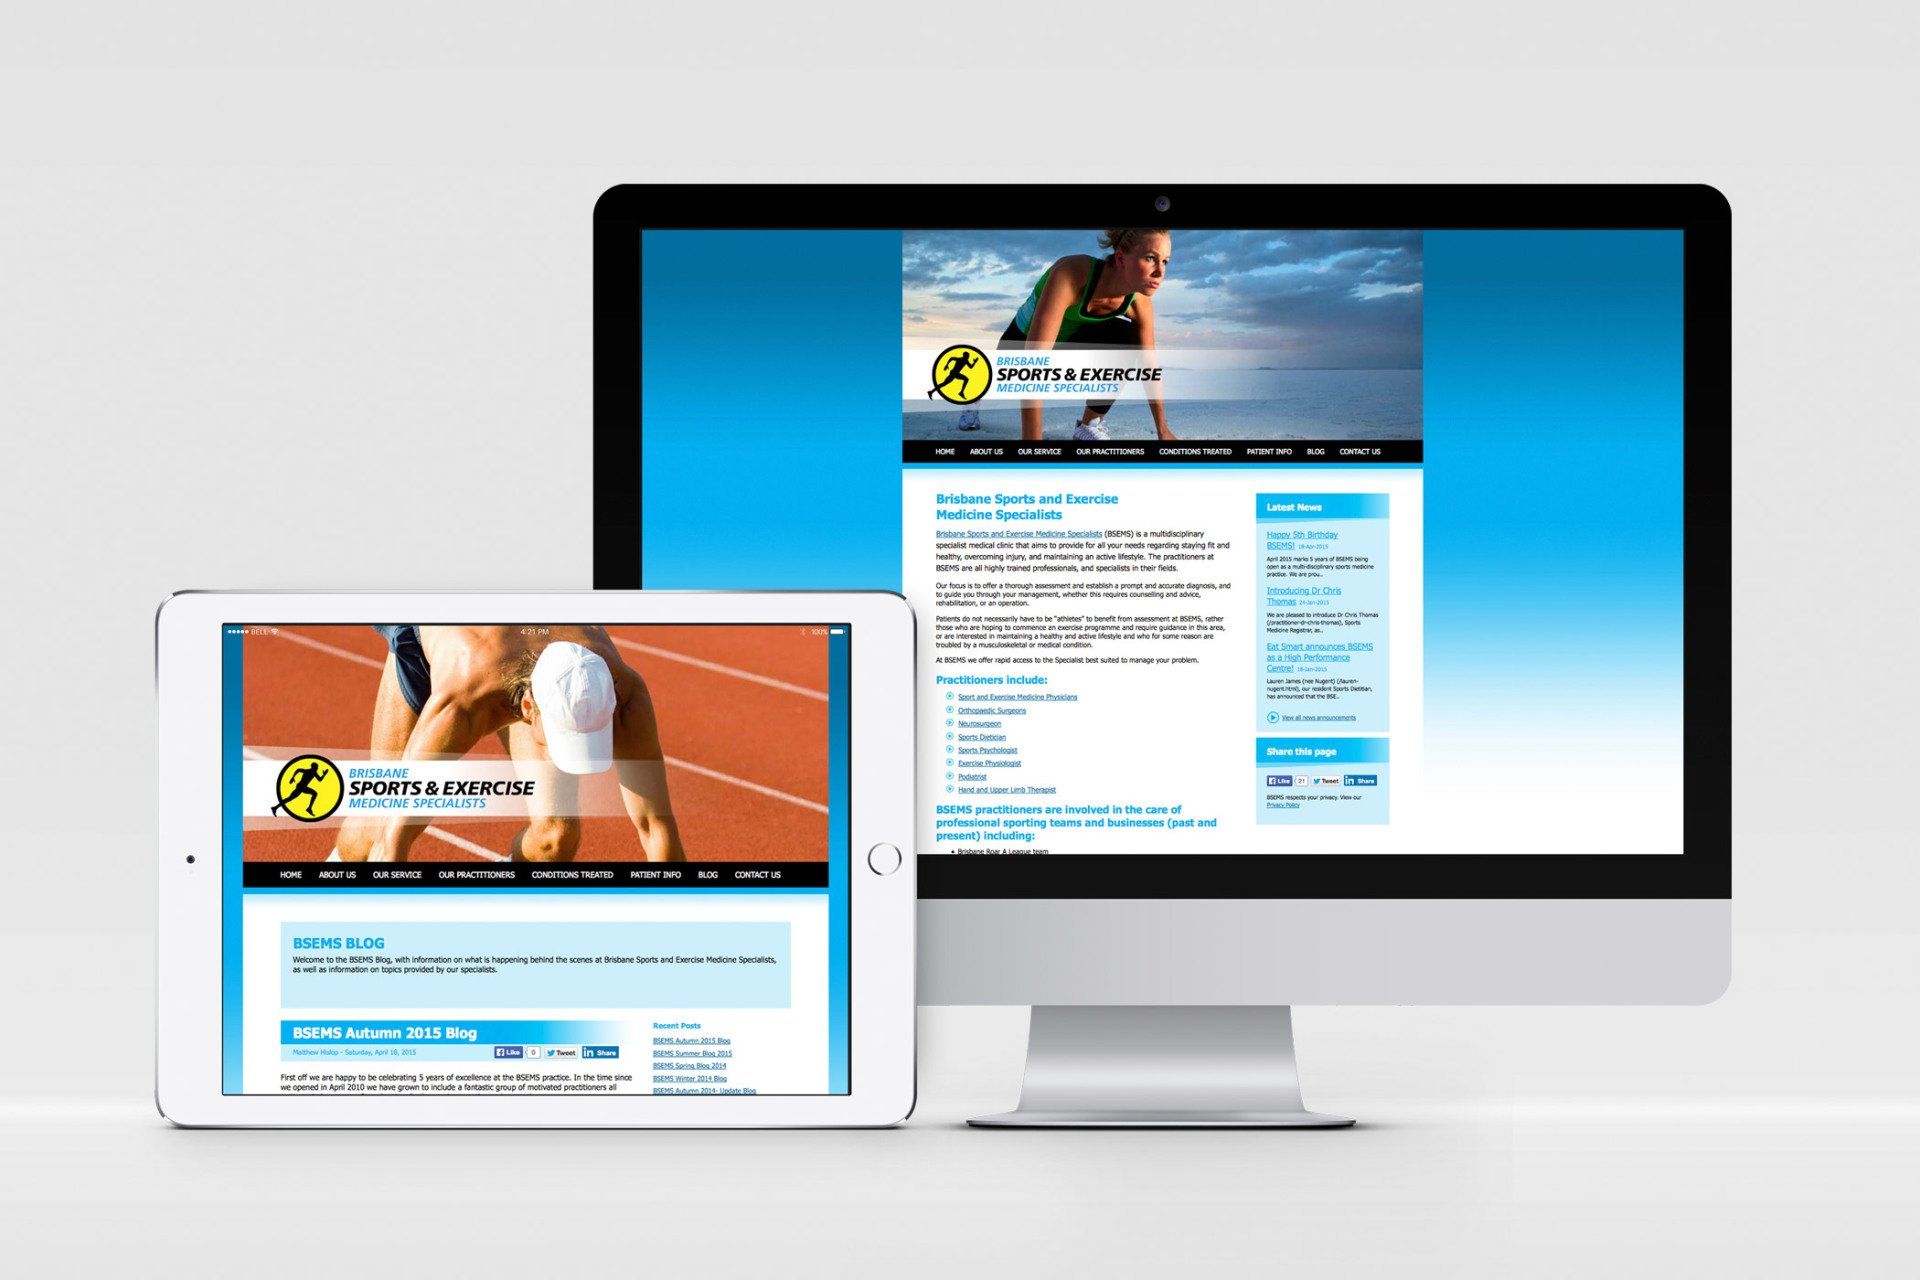 Brisbane Sports & Exercise Medicine Specialists Website